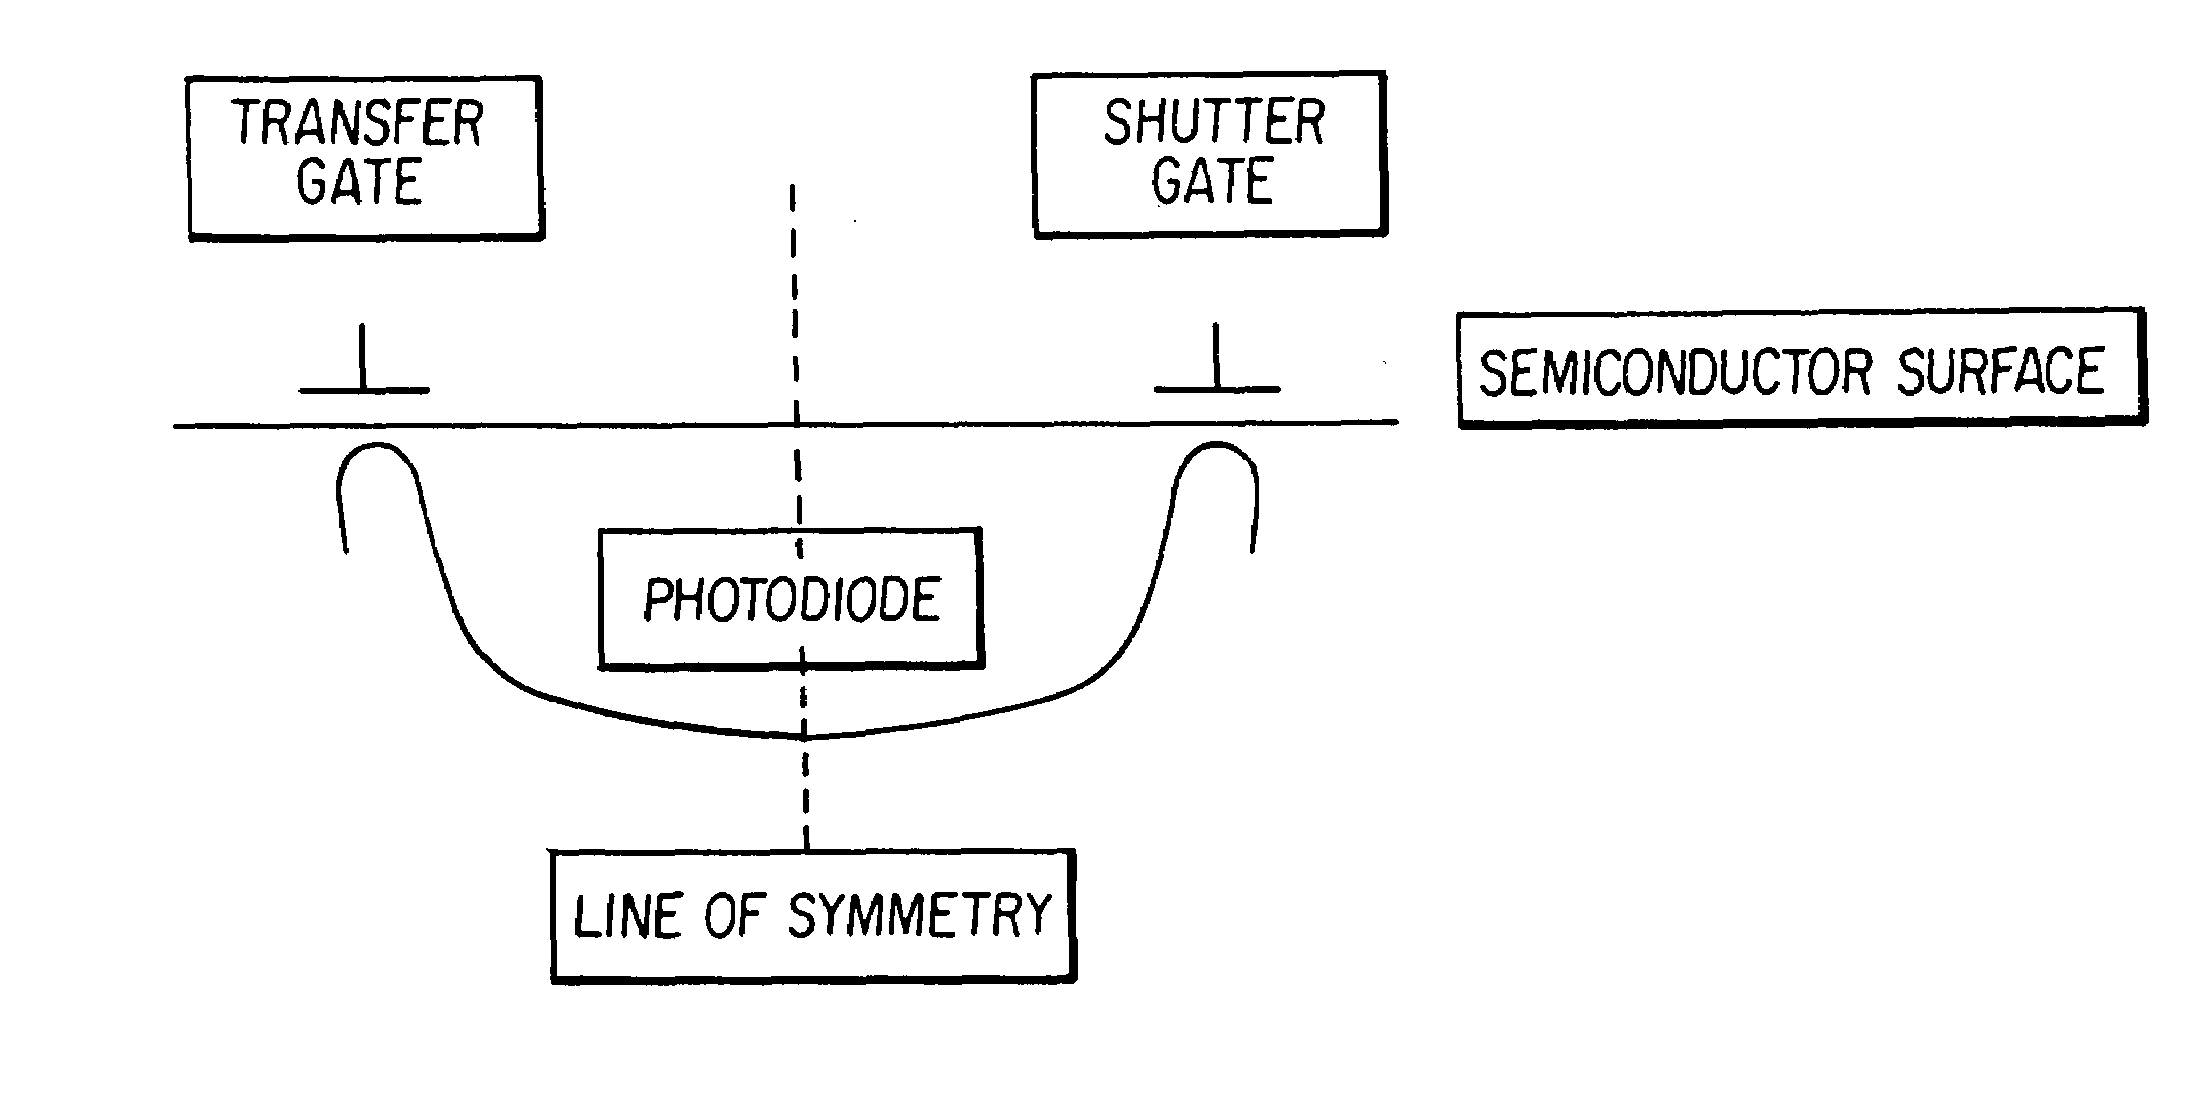 Image sensor pixel for global electronic shuttering